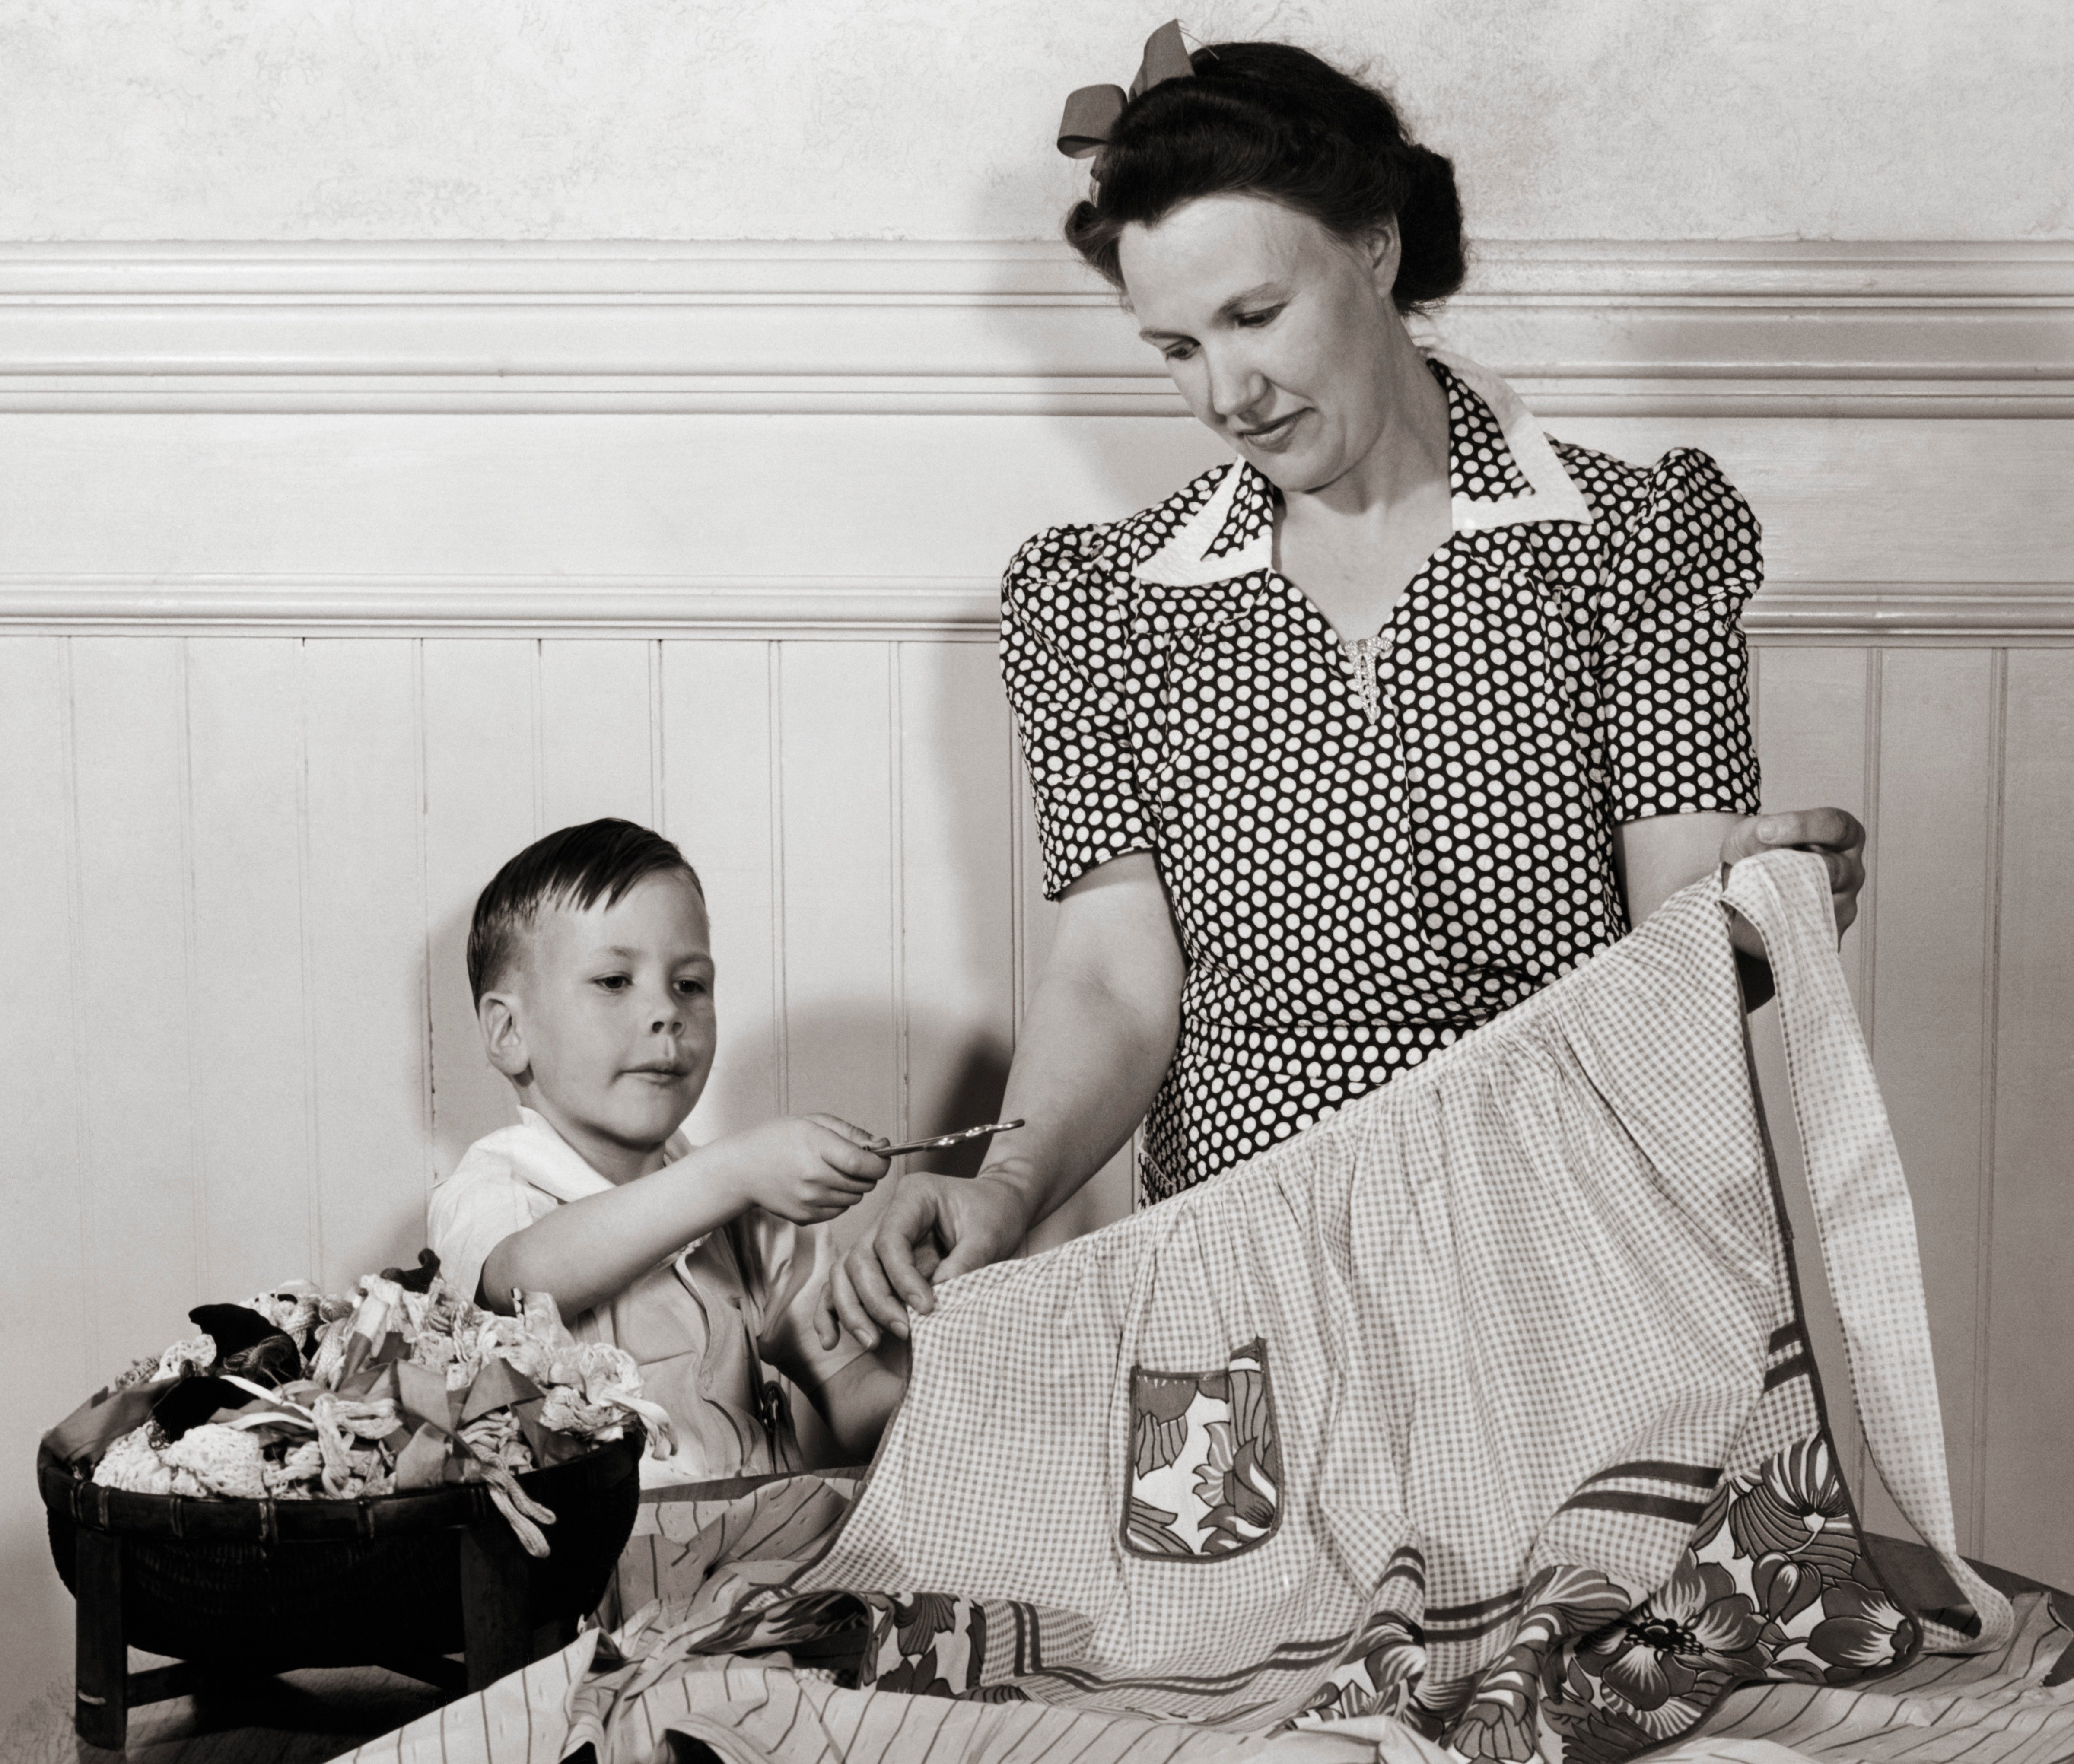 Boy Helping Mother with Laundry (Vintage Images&mdash;www.jupiterimages.com)